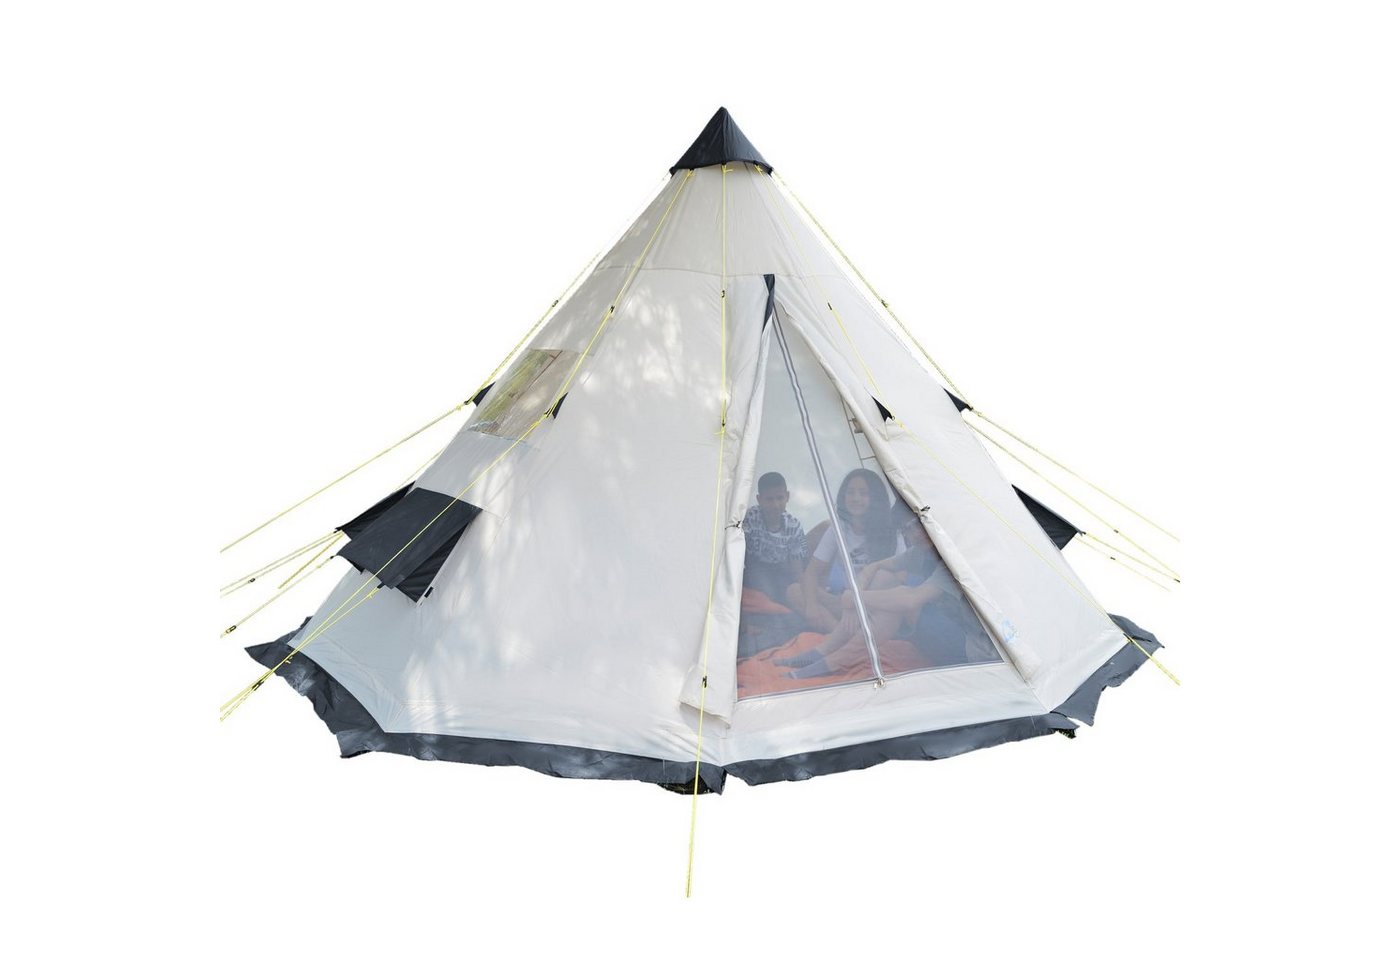 Skandika Tipi-Zelt Goathi 365 Protect 10 Personen Zelt Outdoor, Campingzelt, wasserfest, eingenähter Zeltboden von Skandika